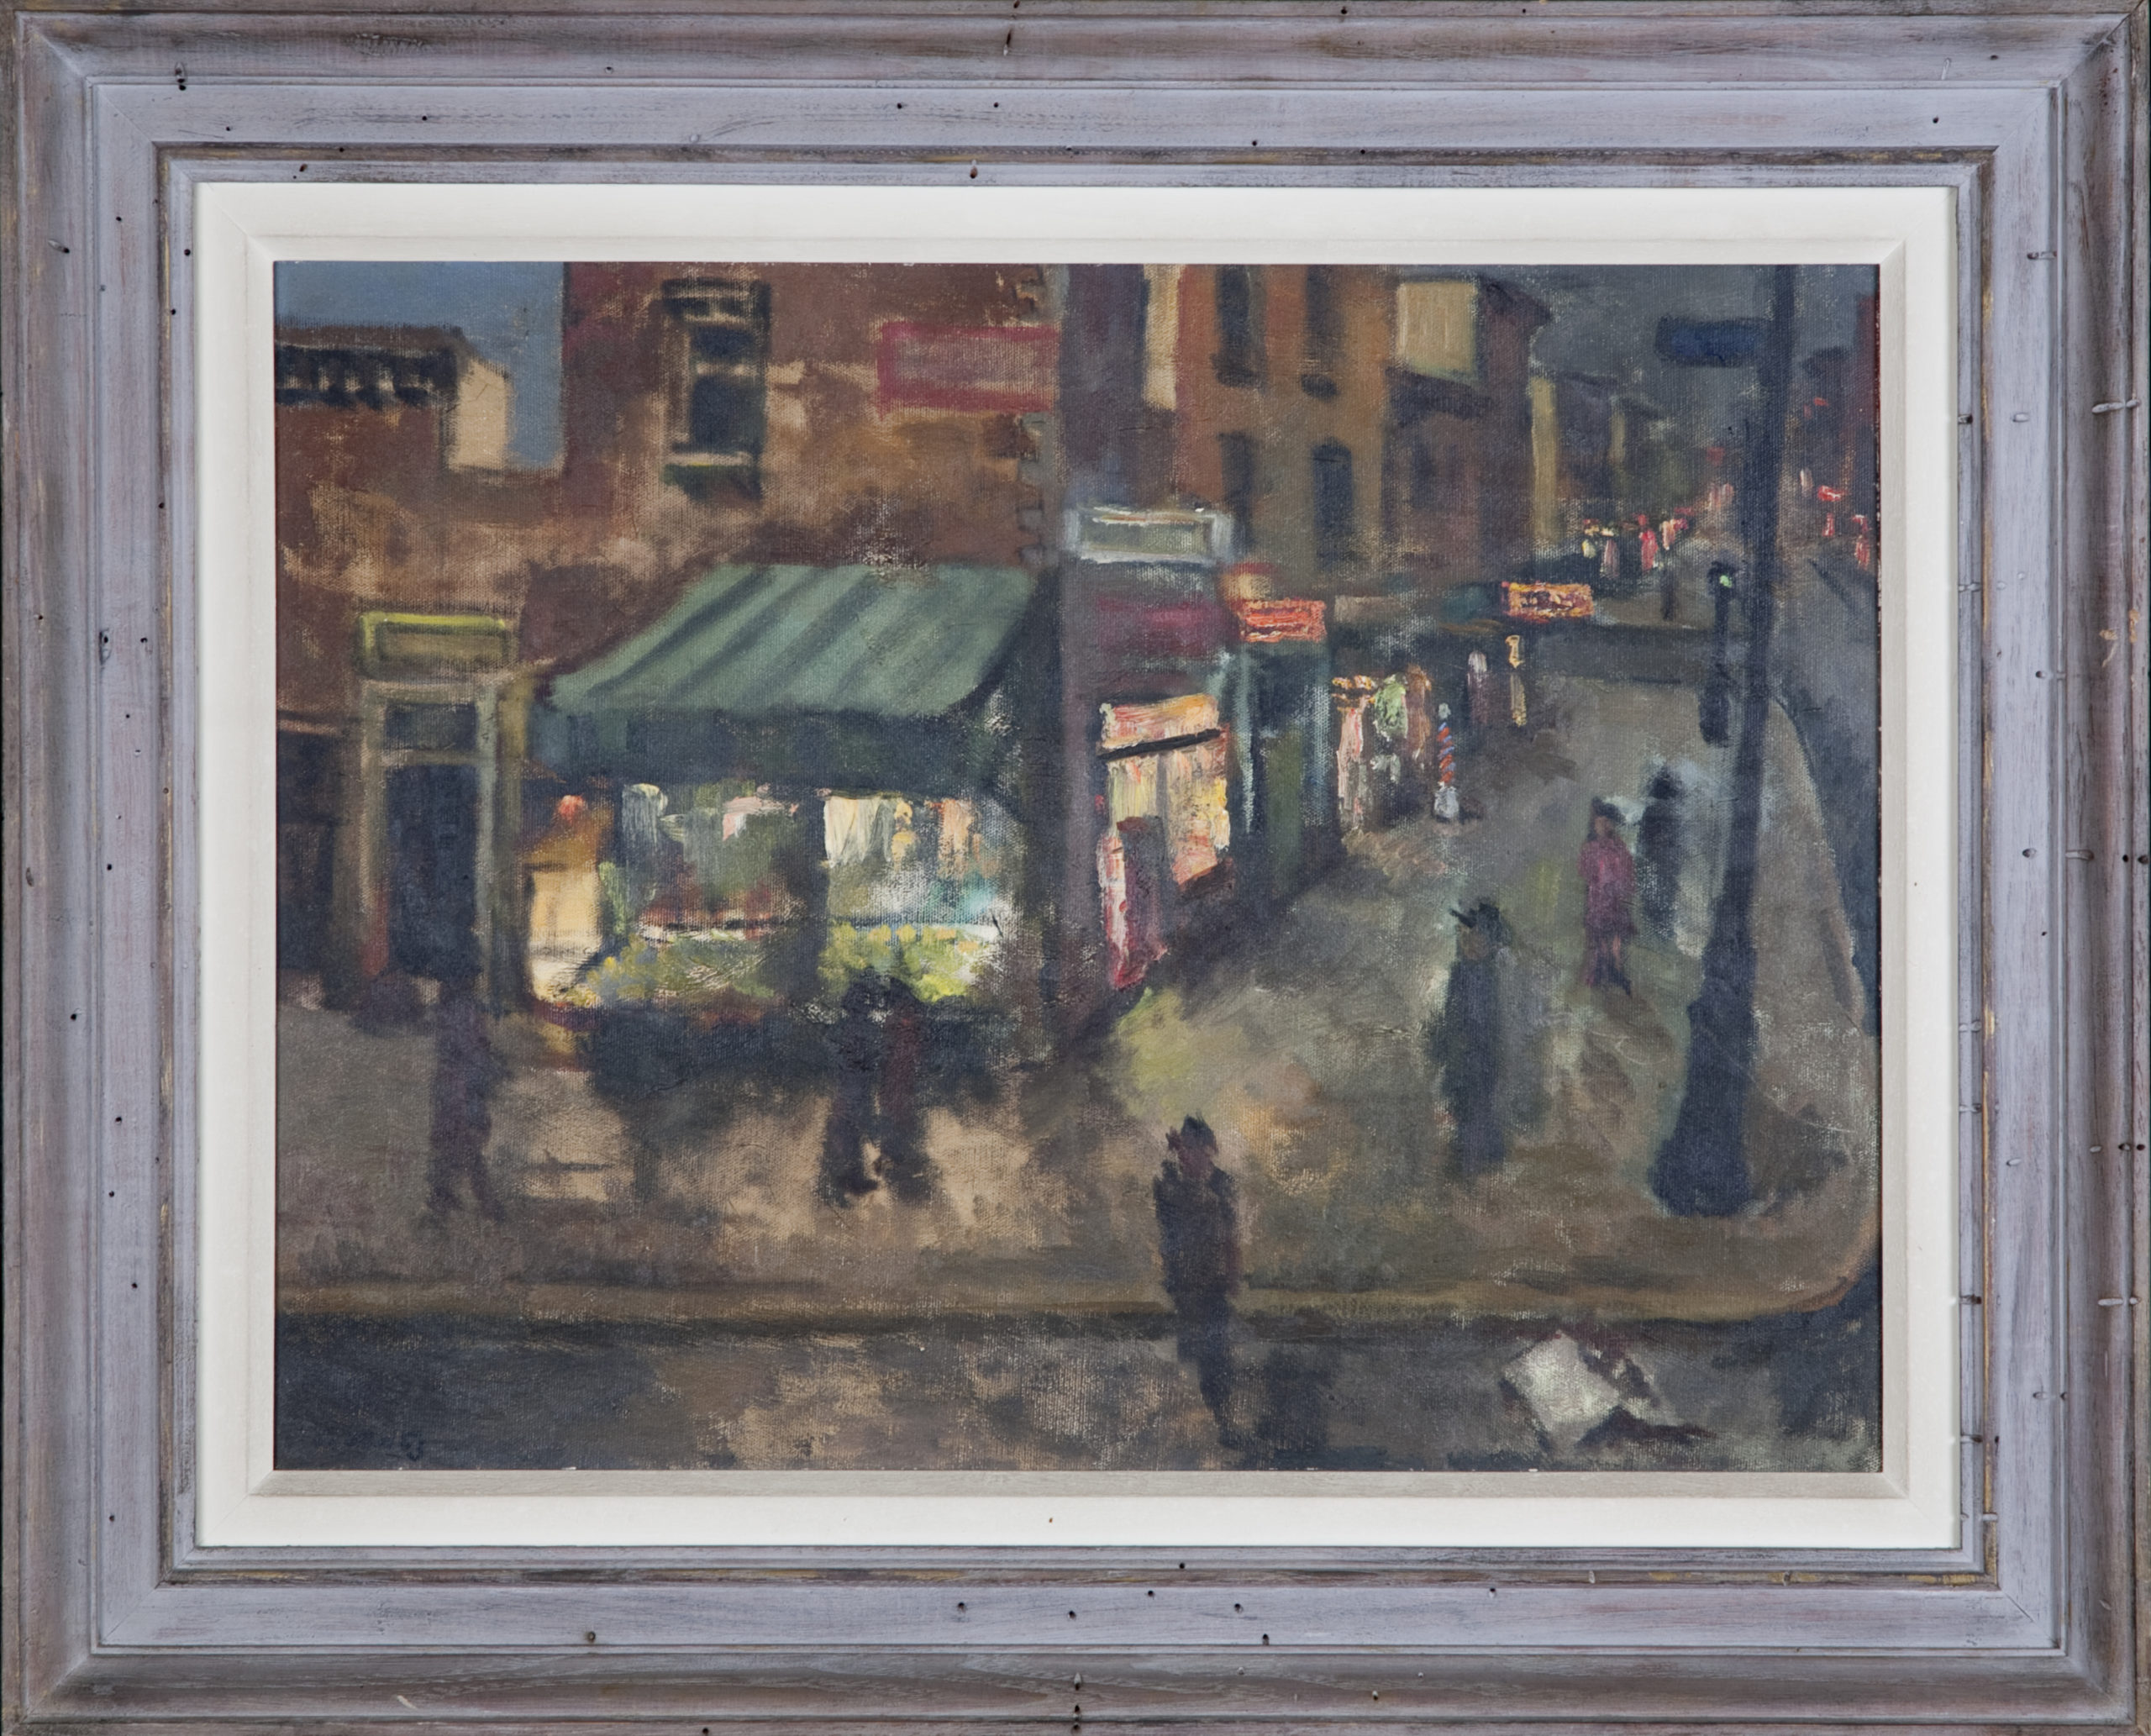 197 Street Corner at Night 1969 - Oil on Canvas - 23.75 x 17.75 - Frame: 25 x 31 x 2.5